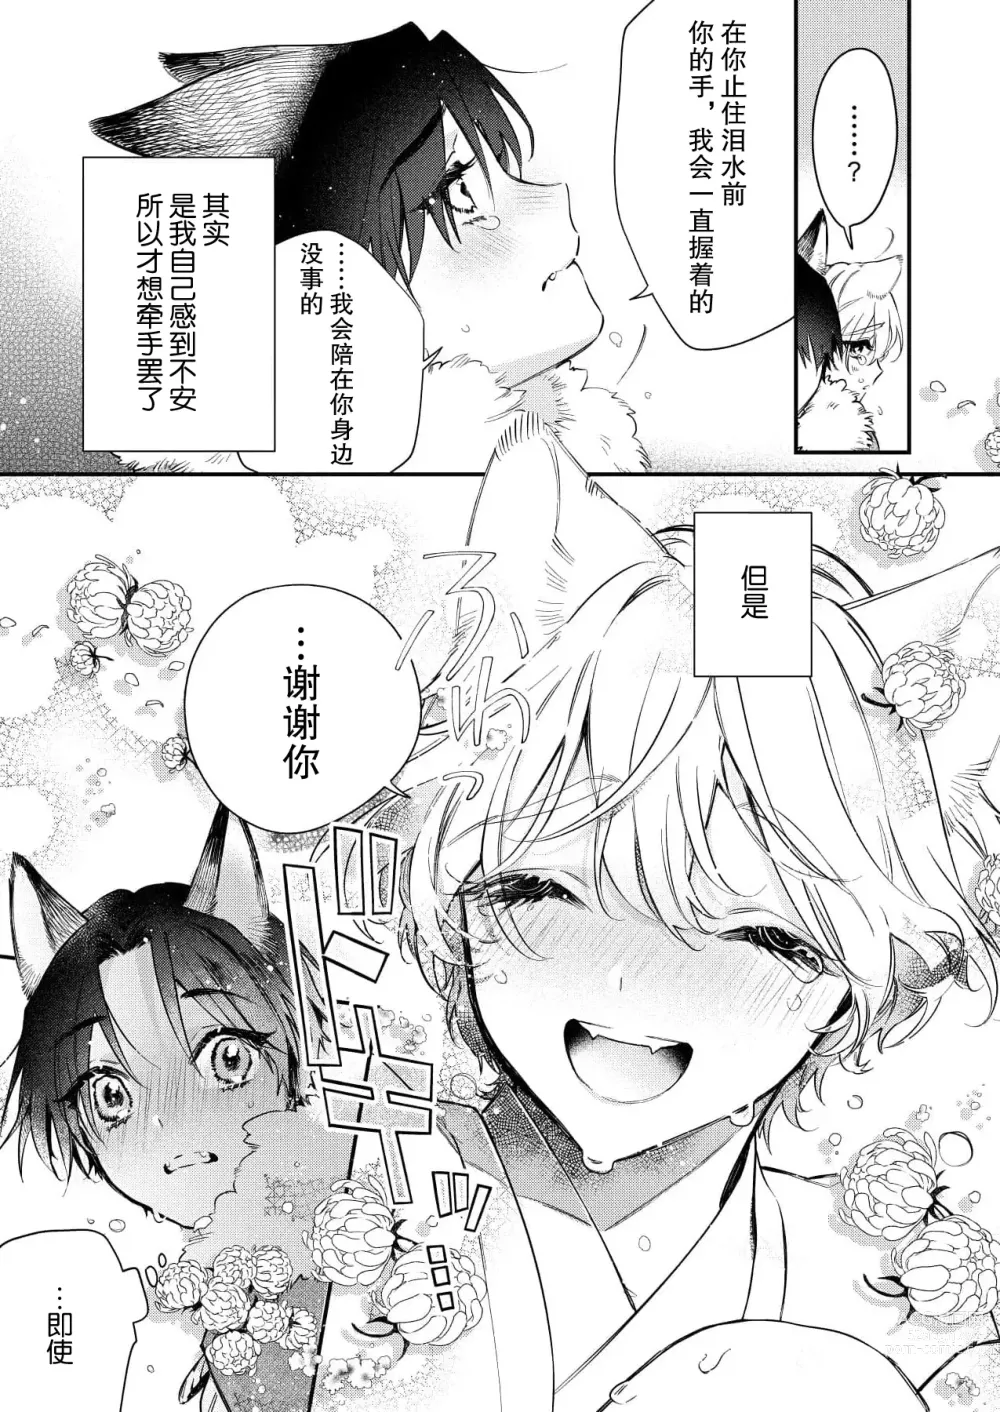 Page 6 of manga 无可奈何花落去 只叹道，命运使然 1-7 end